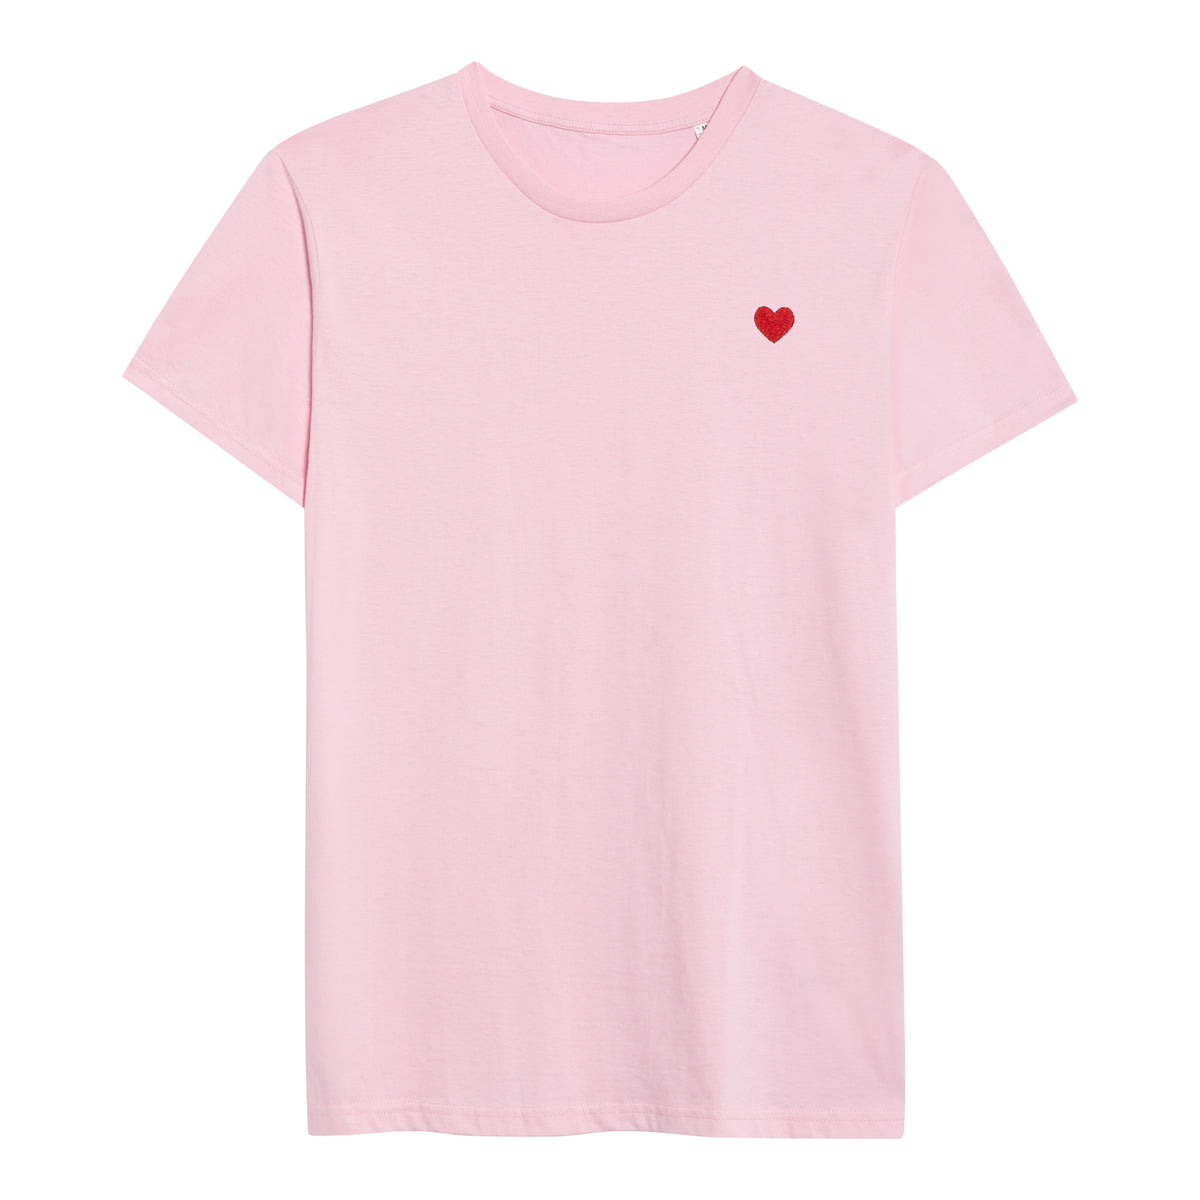 Camiseta Rosa Corazón Bordado